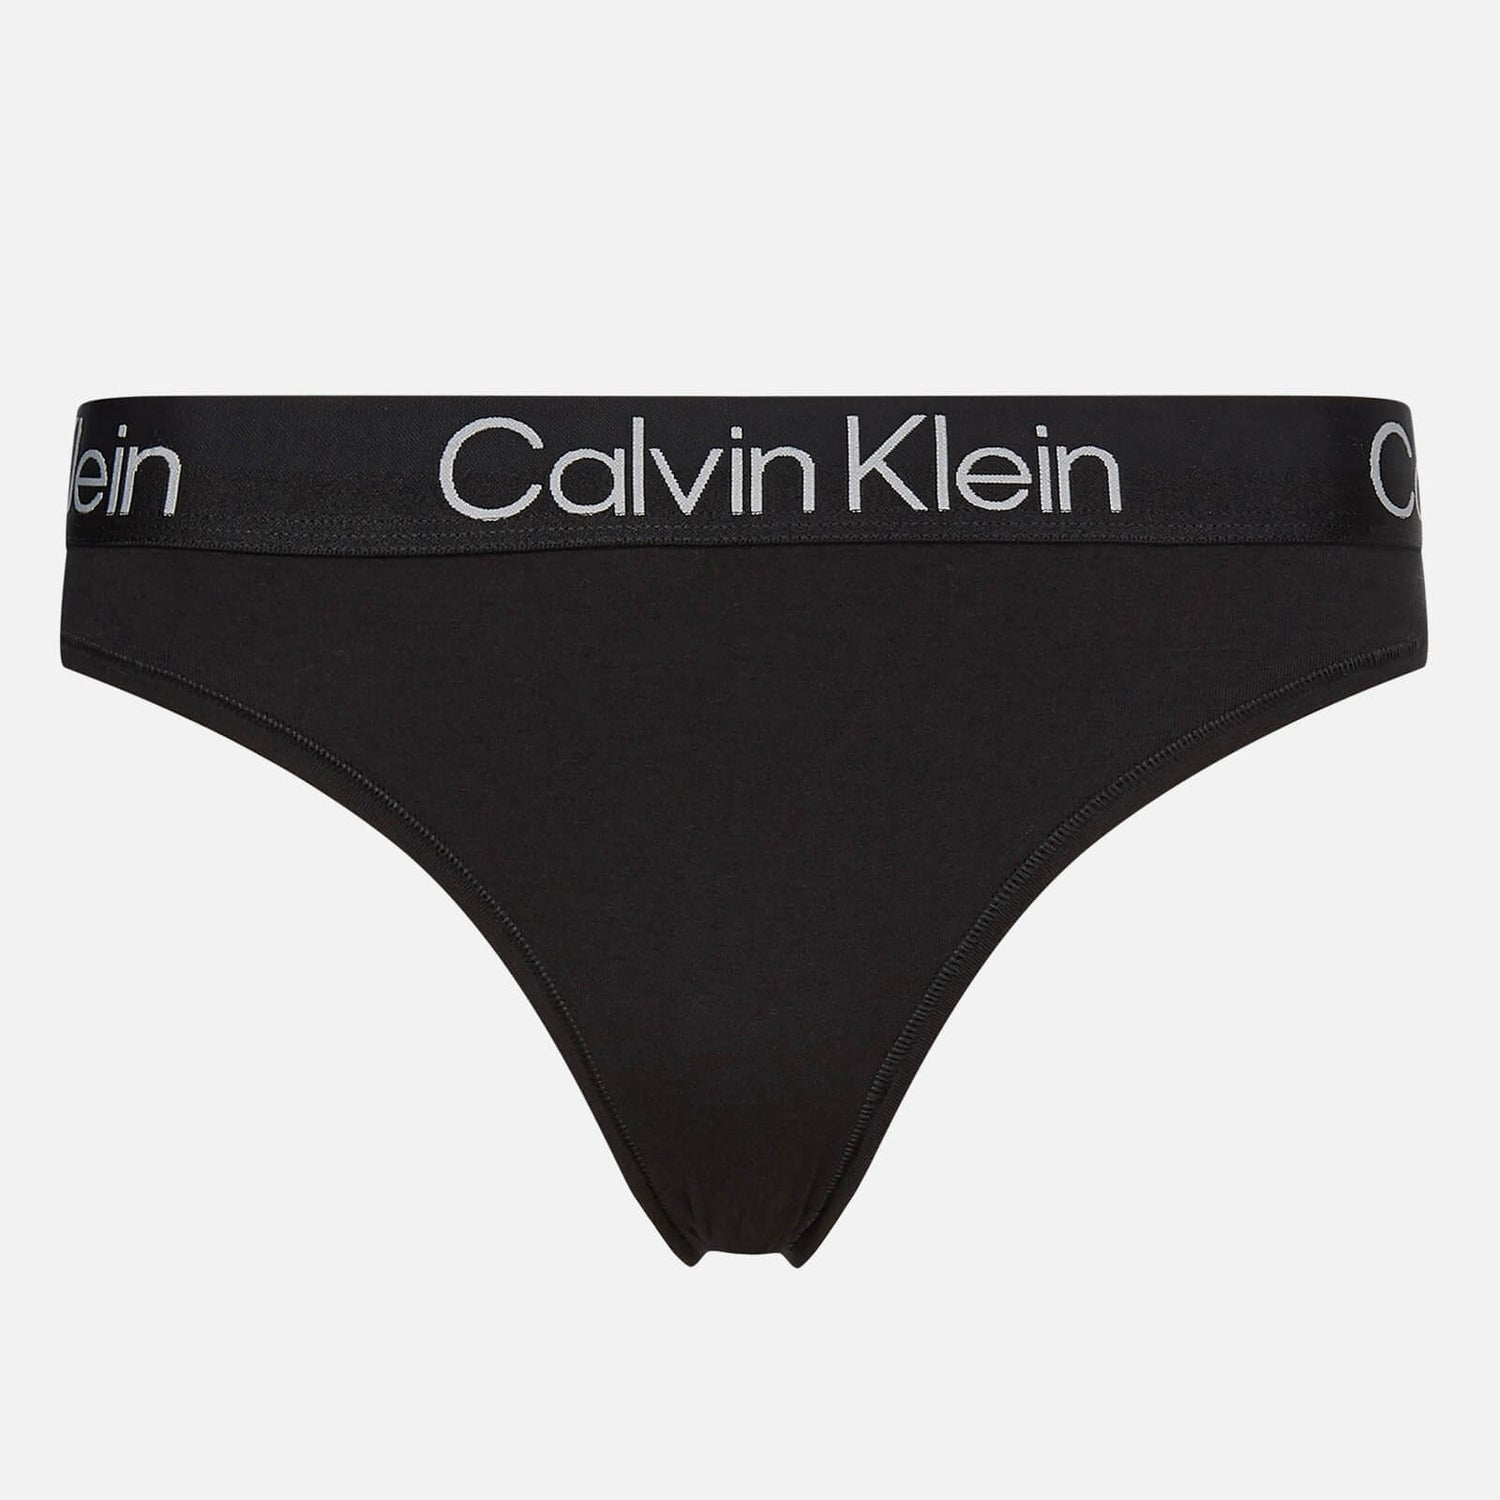 Calvin Klein Women's Modern Structure Cheeky Bikini - Black